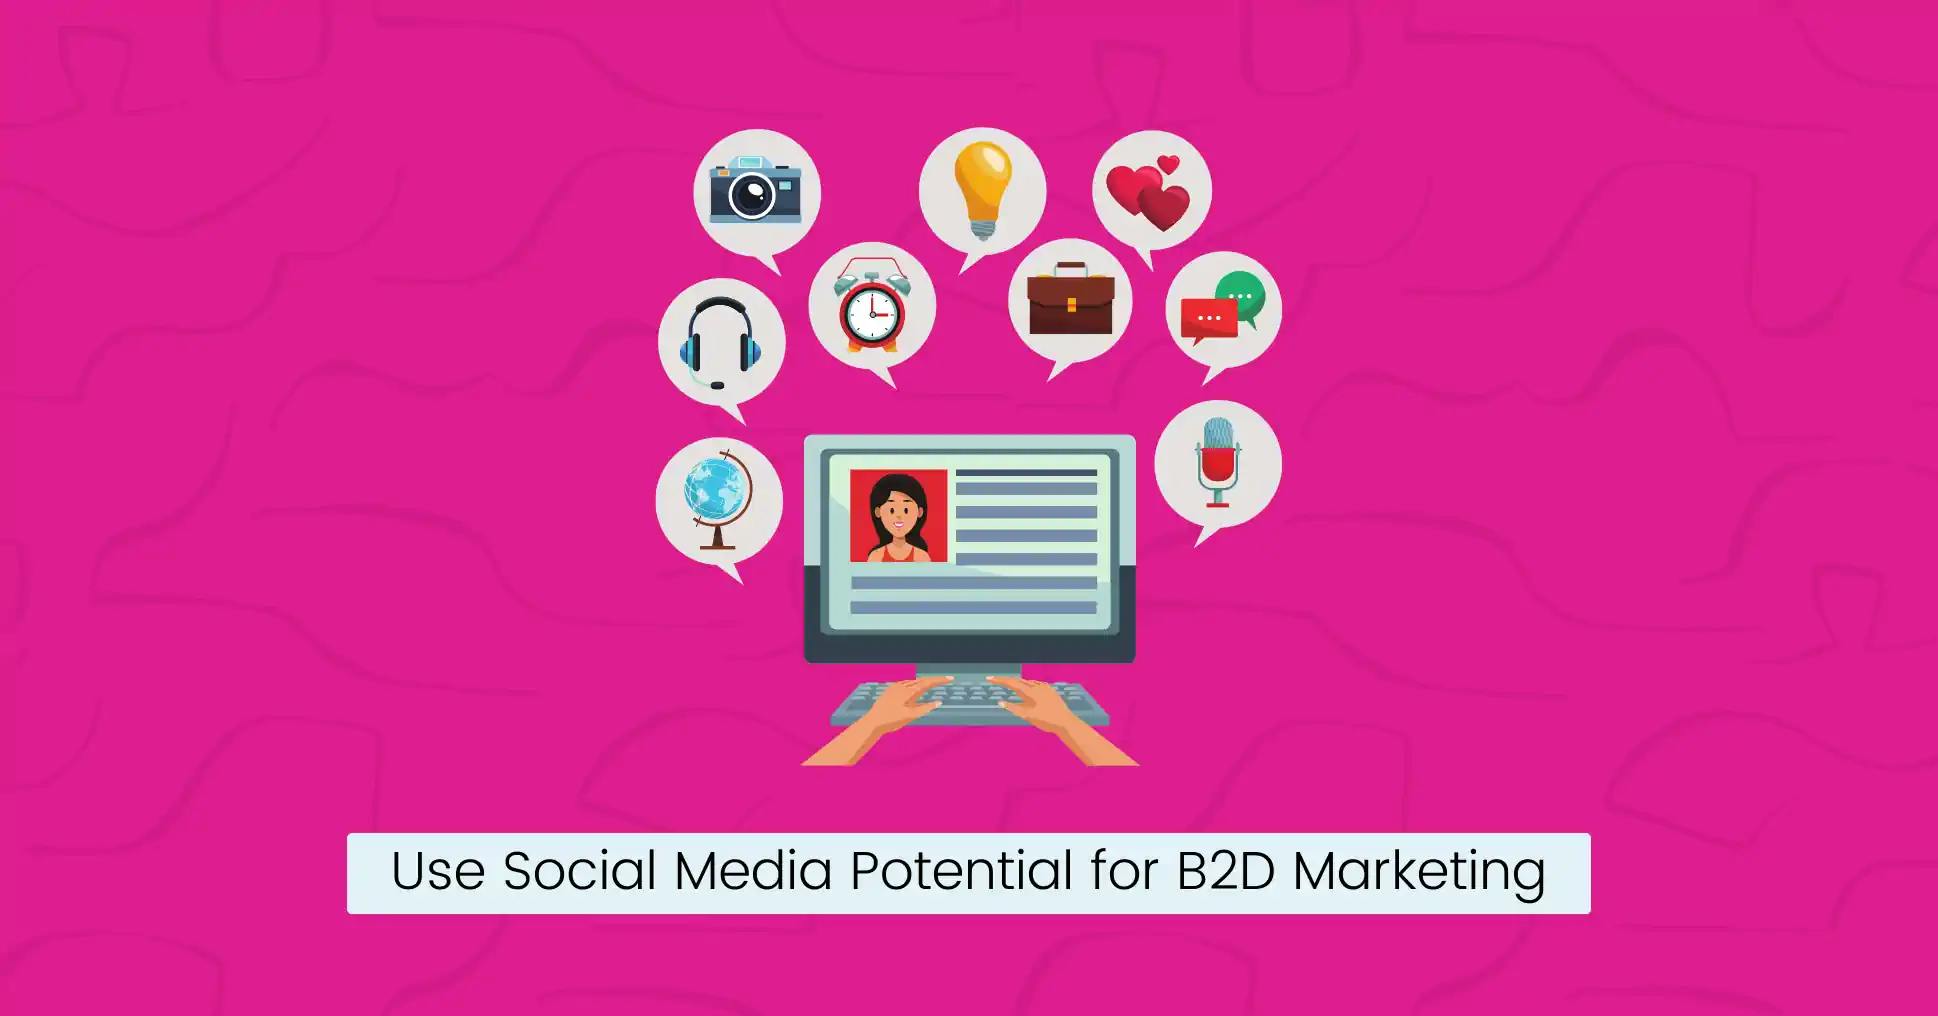 Use social media potential for B2D marketing